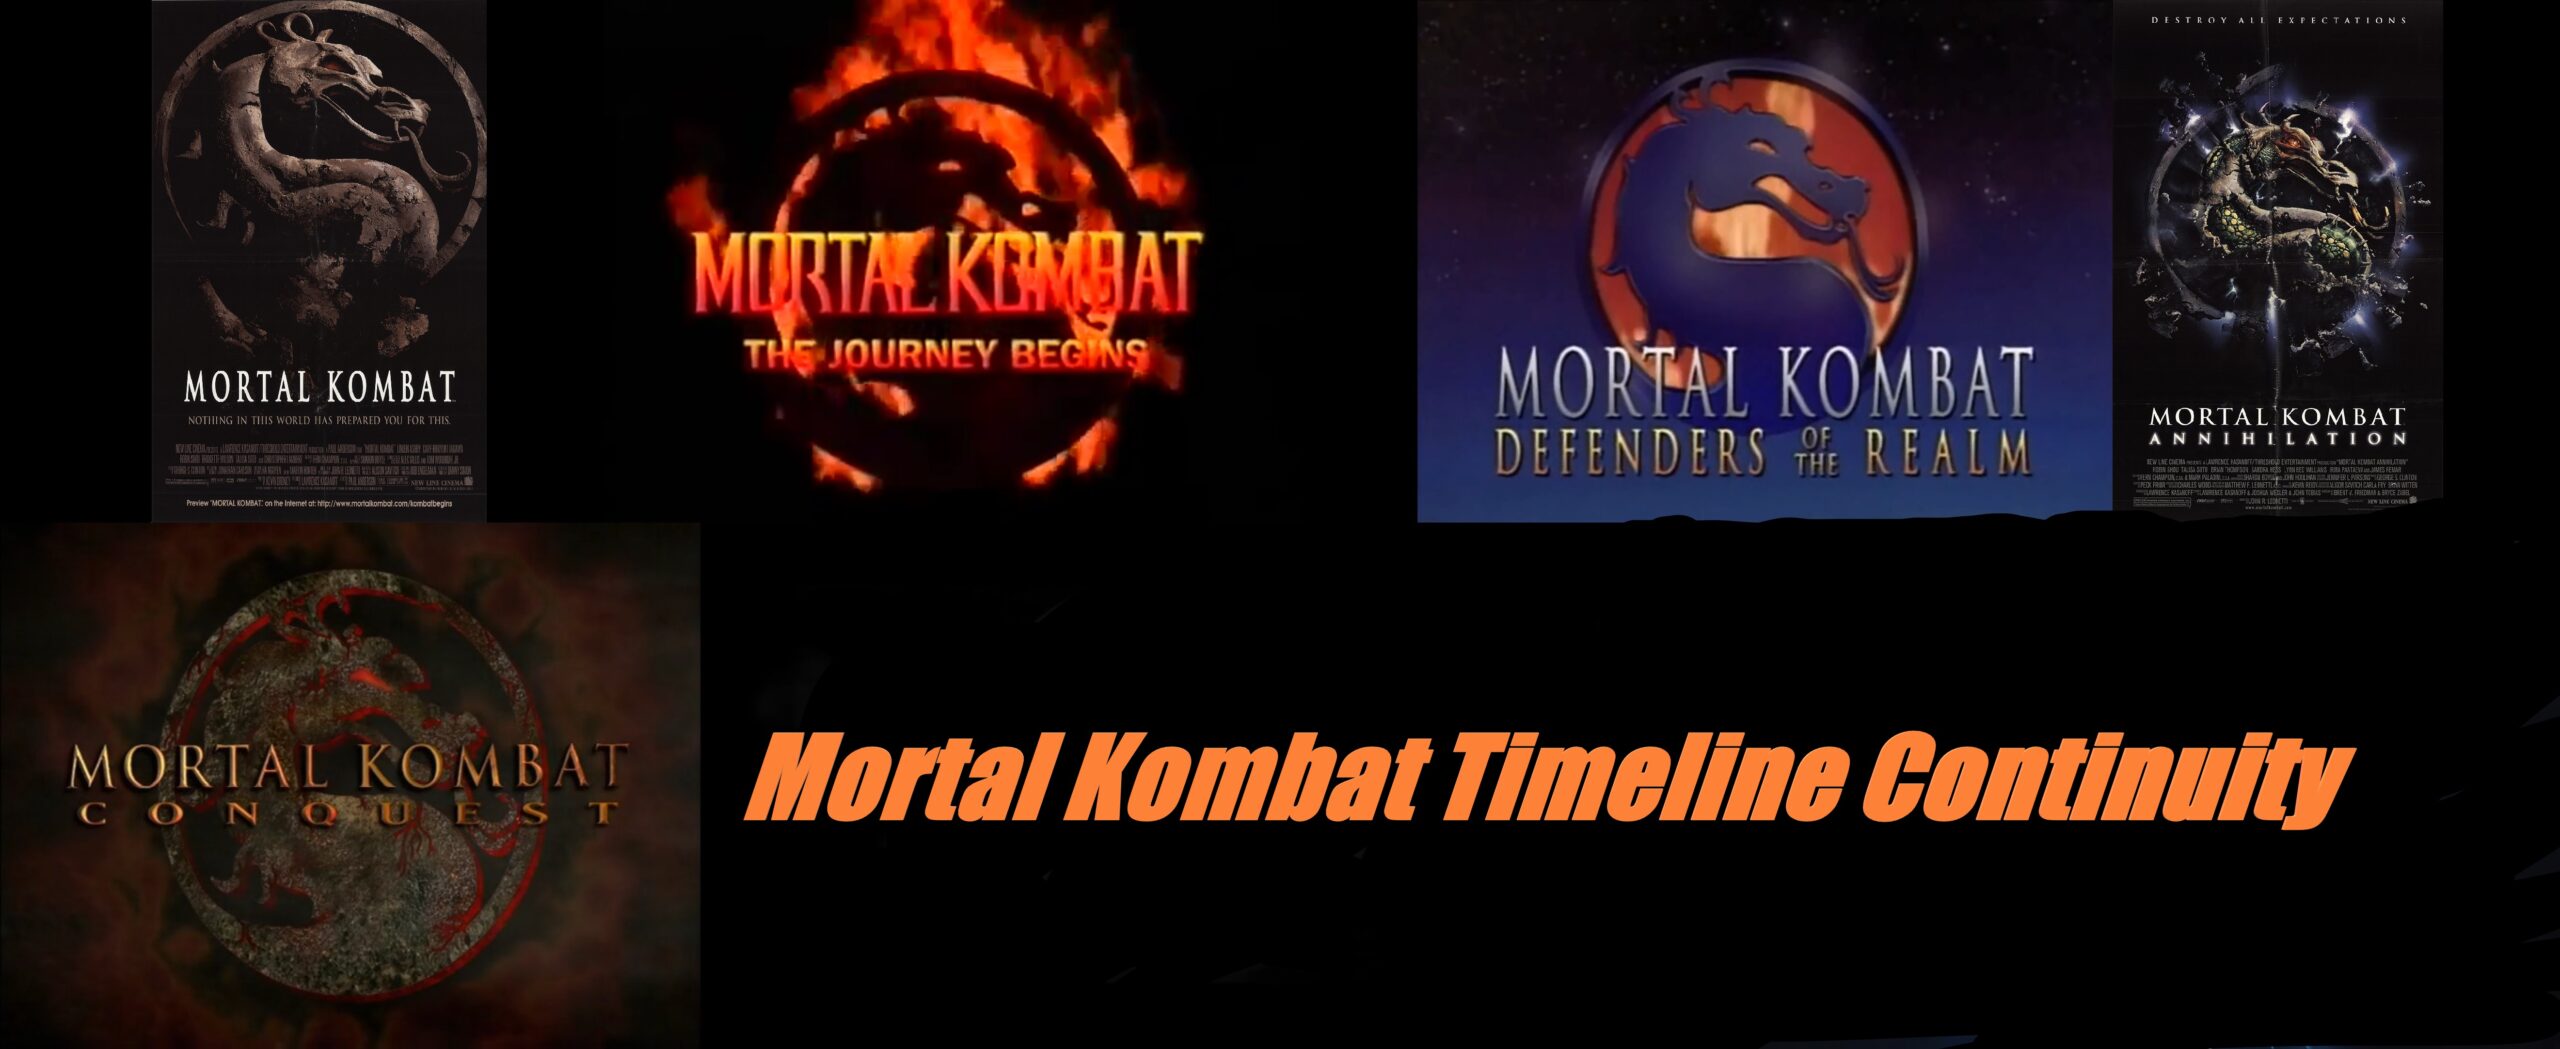 90s Multimedia Shared Mortal Kombat Universe Timeline – Movie, TV show, Cartoon, Oh my!